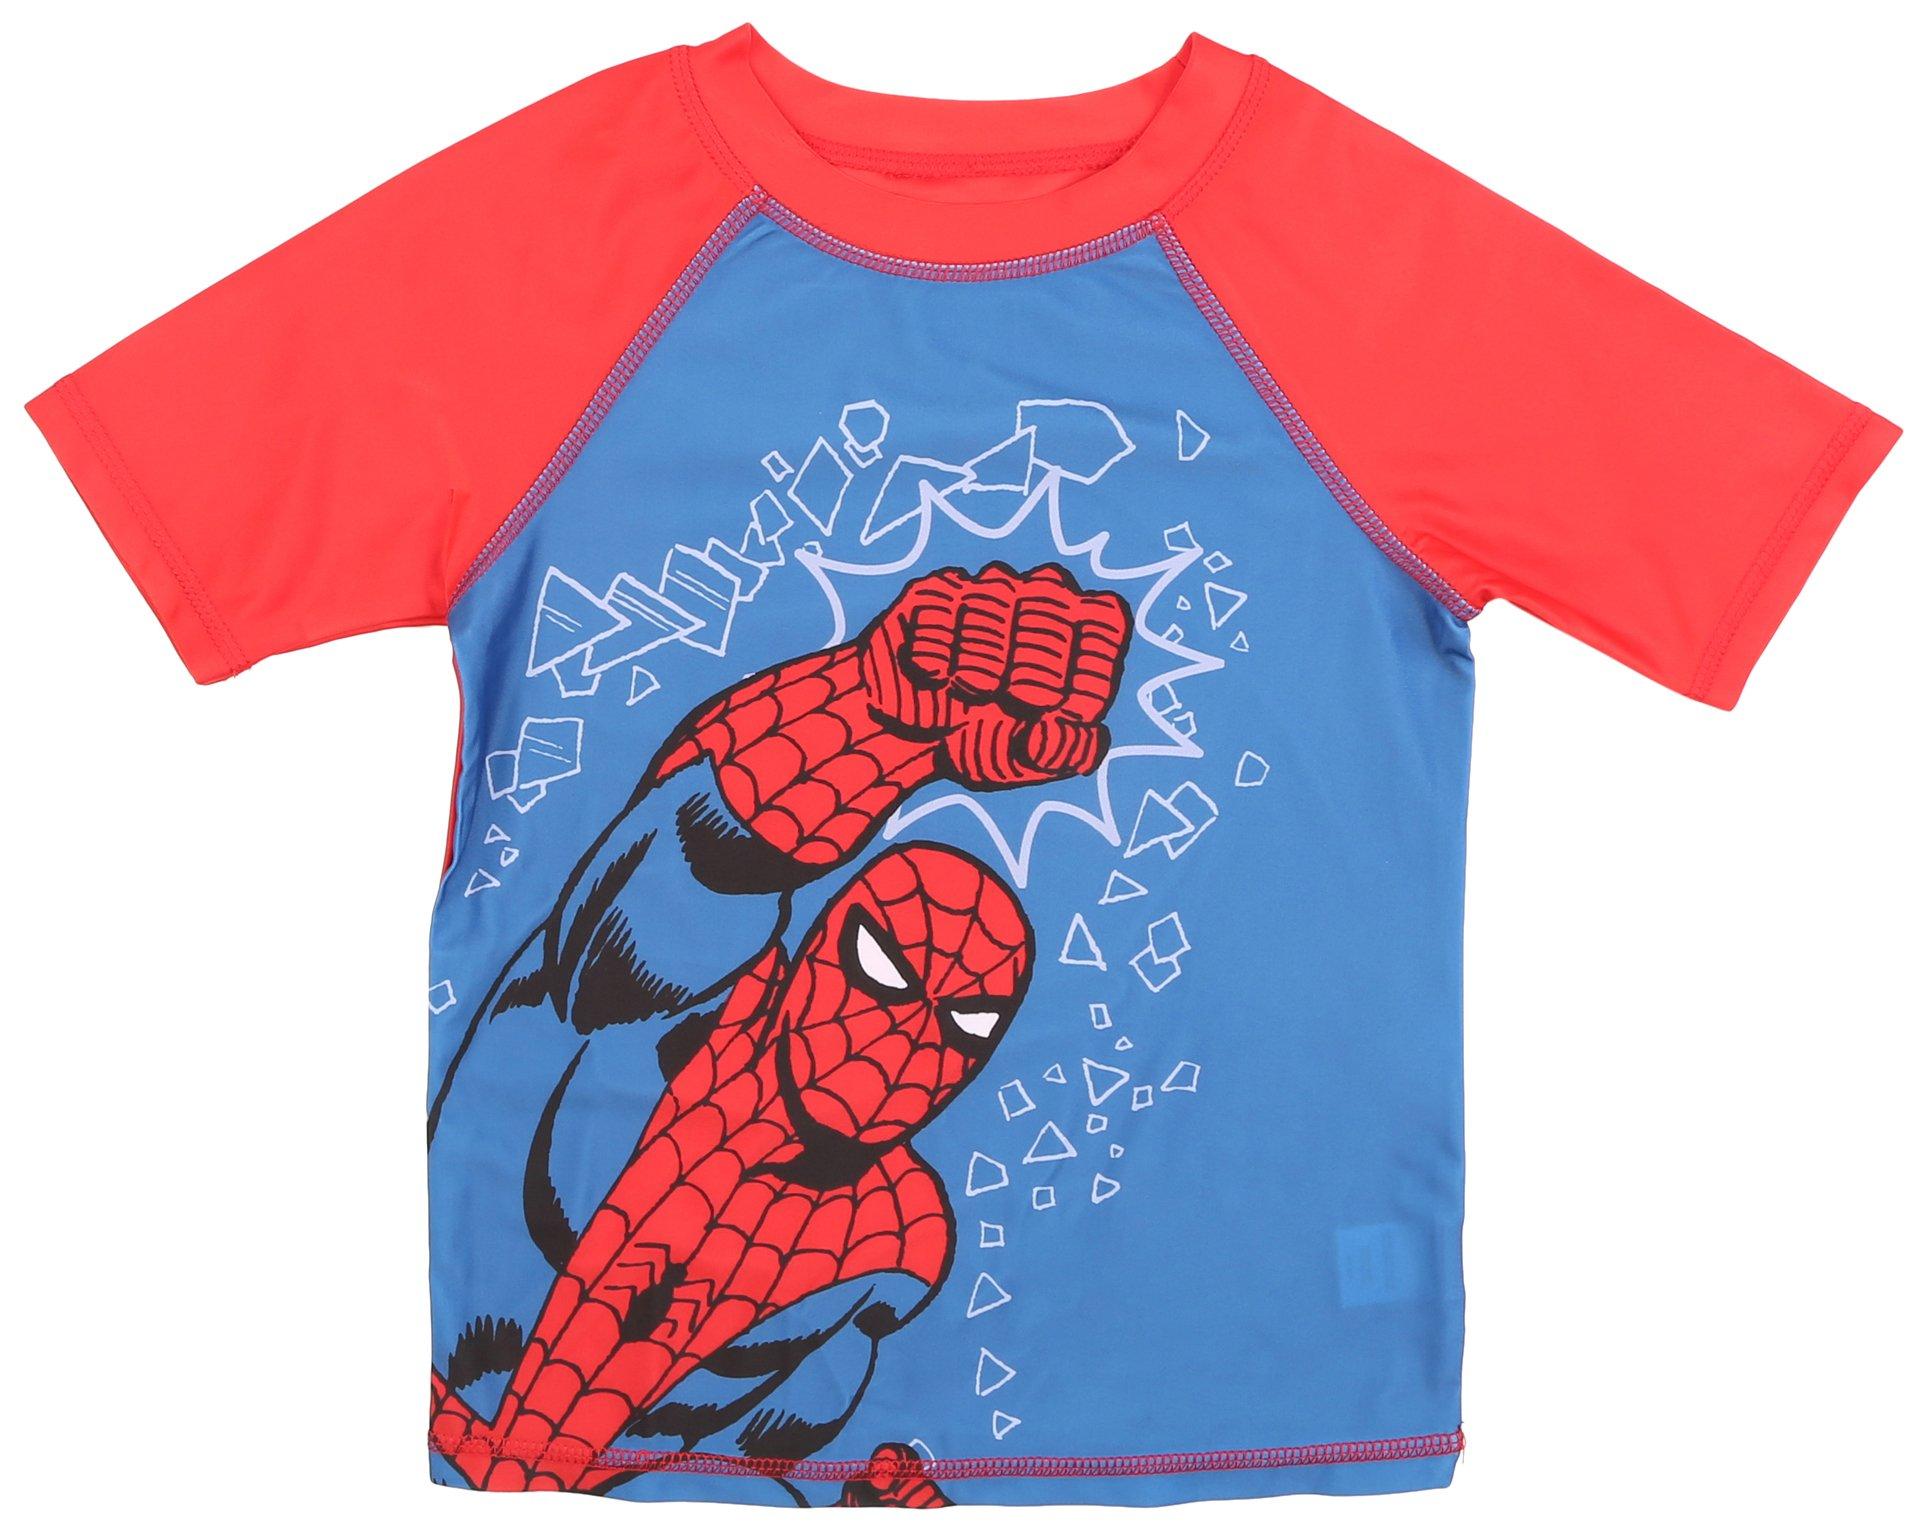 Little boys Spiderman Rashguard Swim Shirt